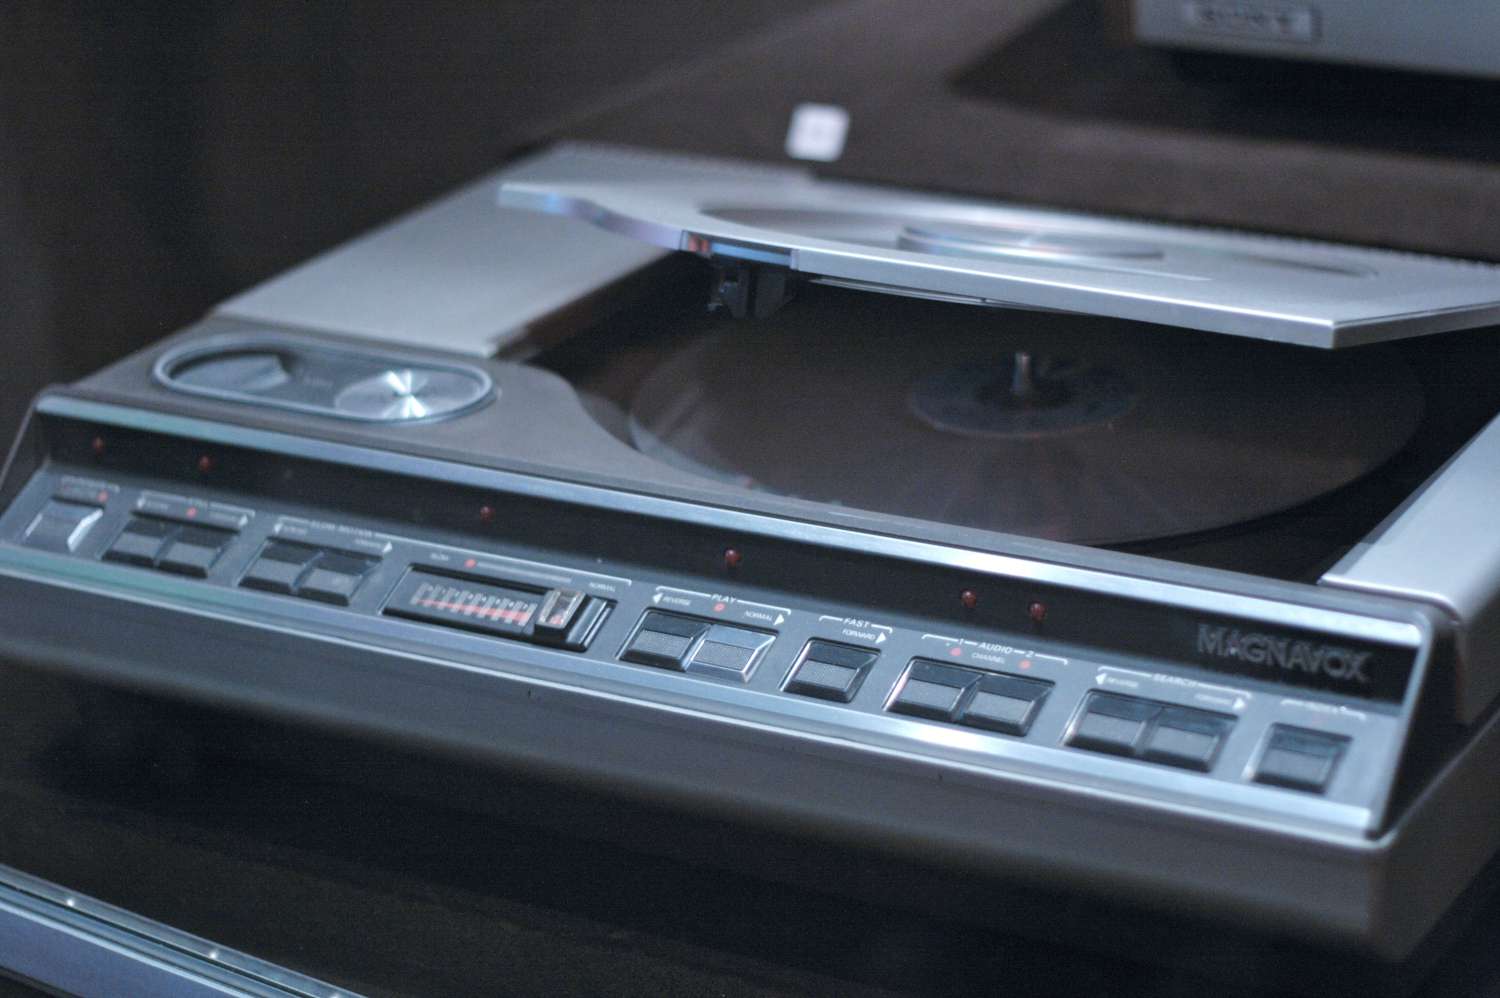 Leitor Magnaxbox LaserDisc com slot de disco aberto